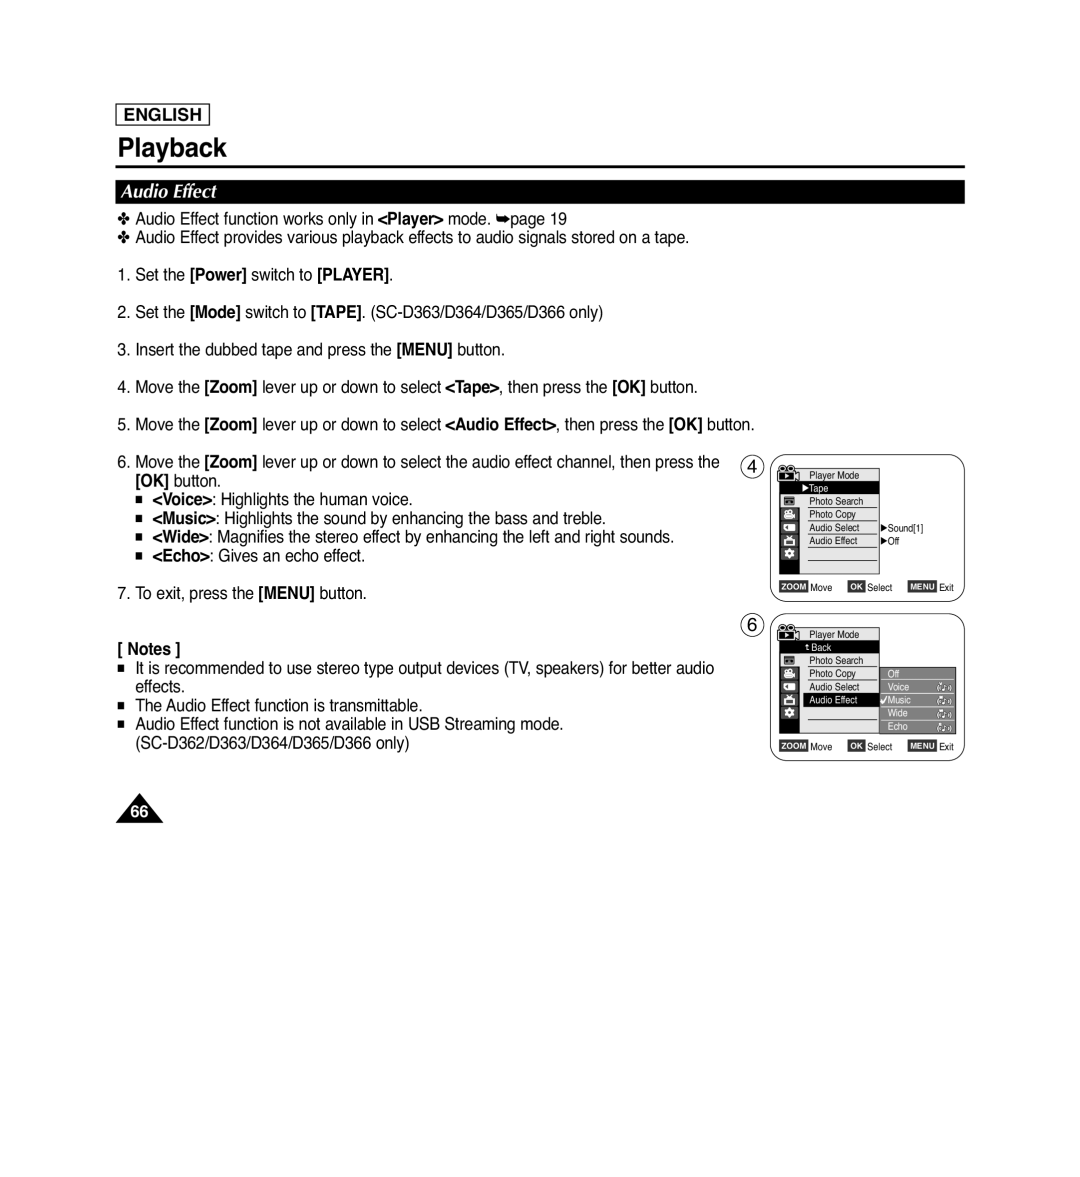 Samsung SC-D364, SC-D263, SC-D366, SC-D362 manual Audio Effect, Playback, English 